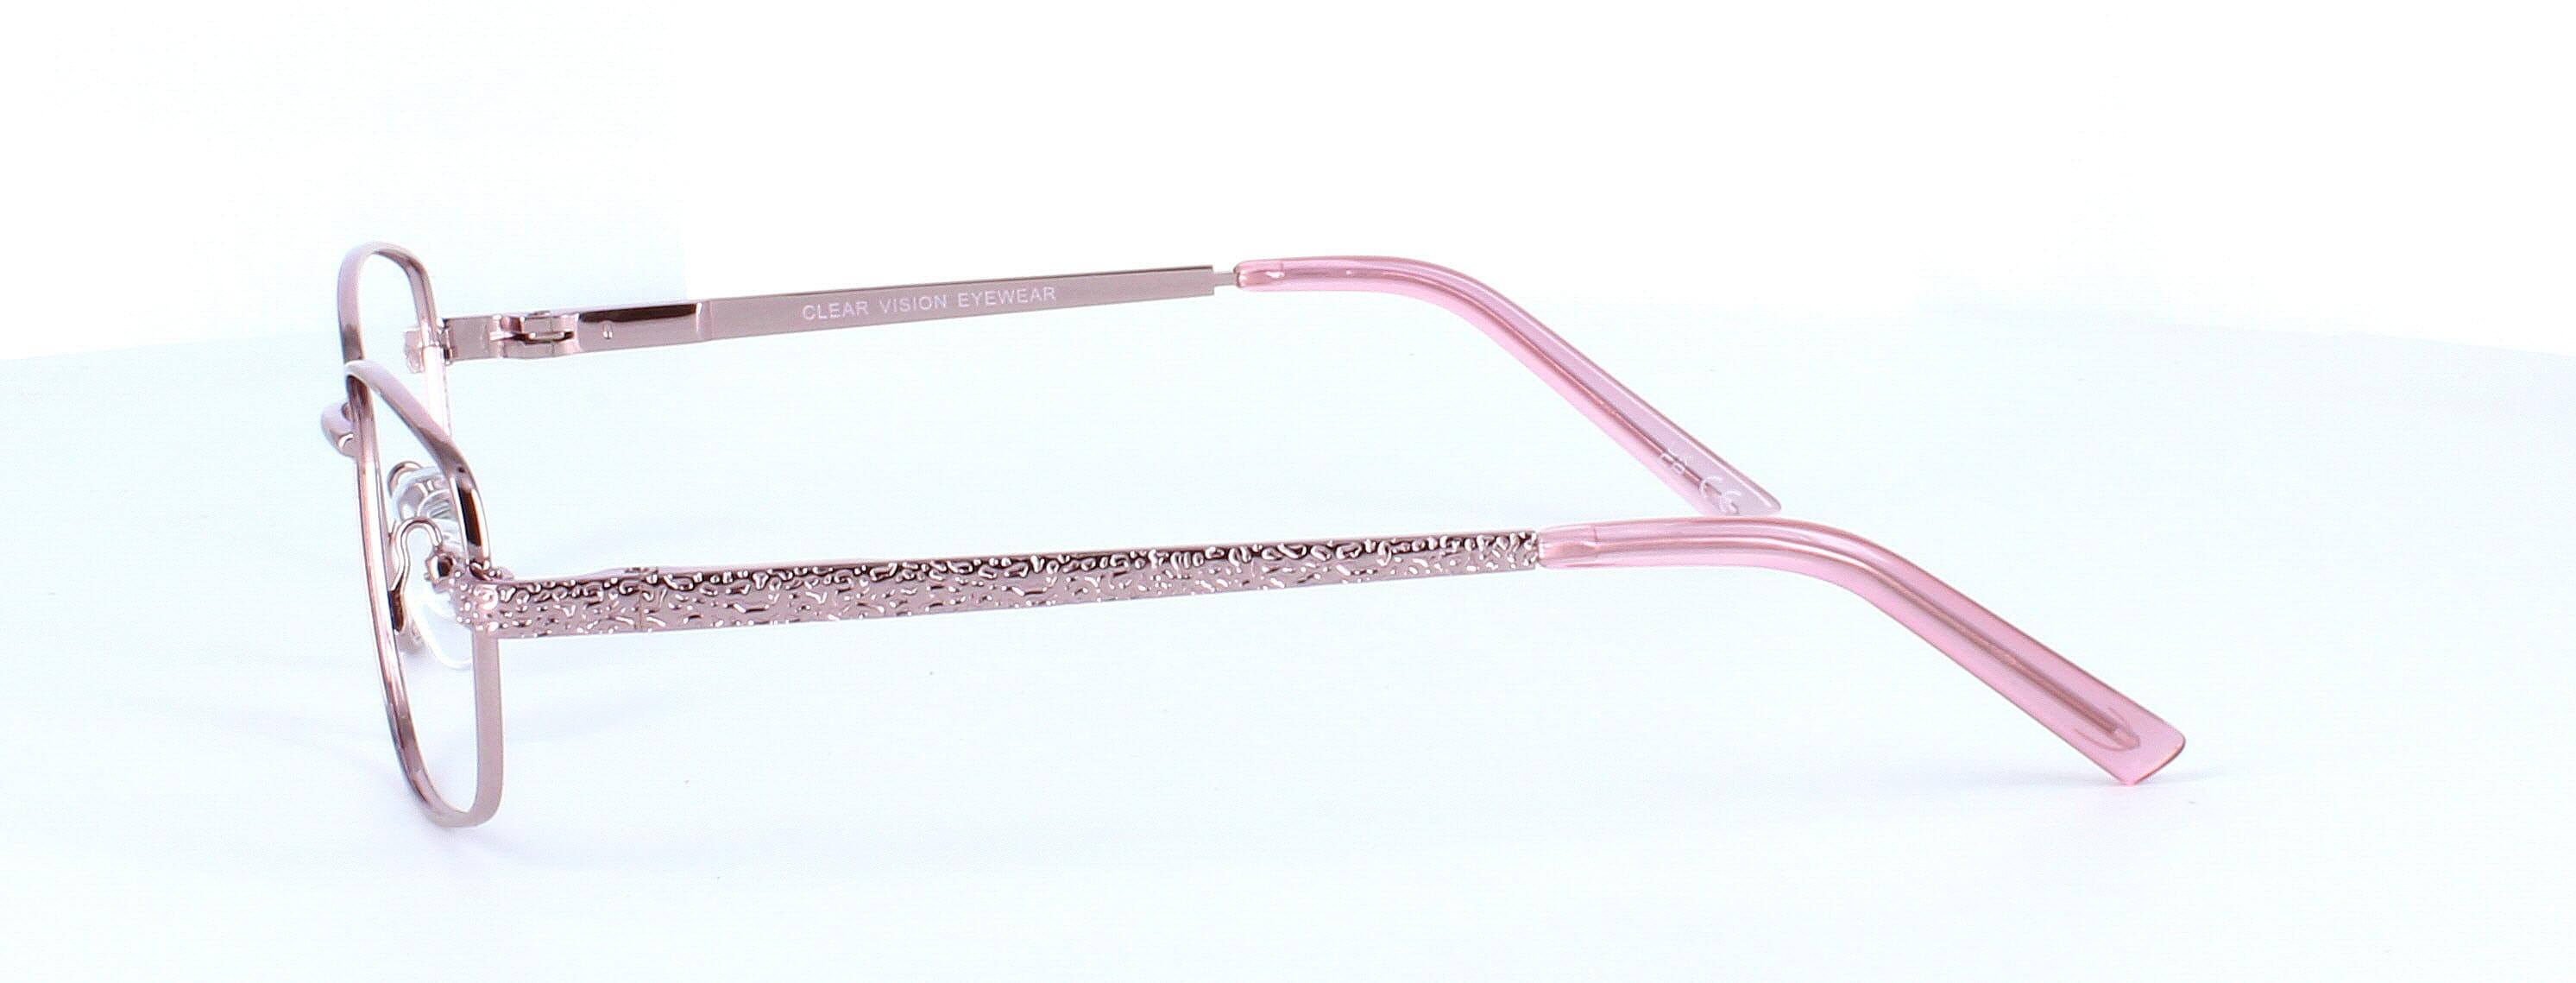 Sophia - Ladies rectangular shaped metal glasses with sprung hinge temple - image view 2